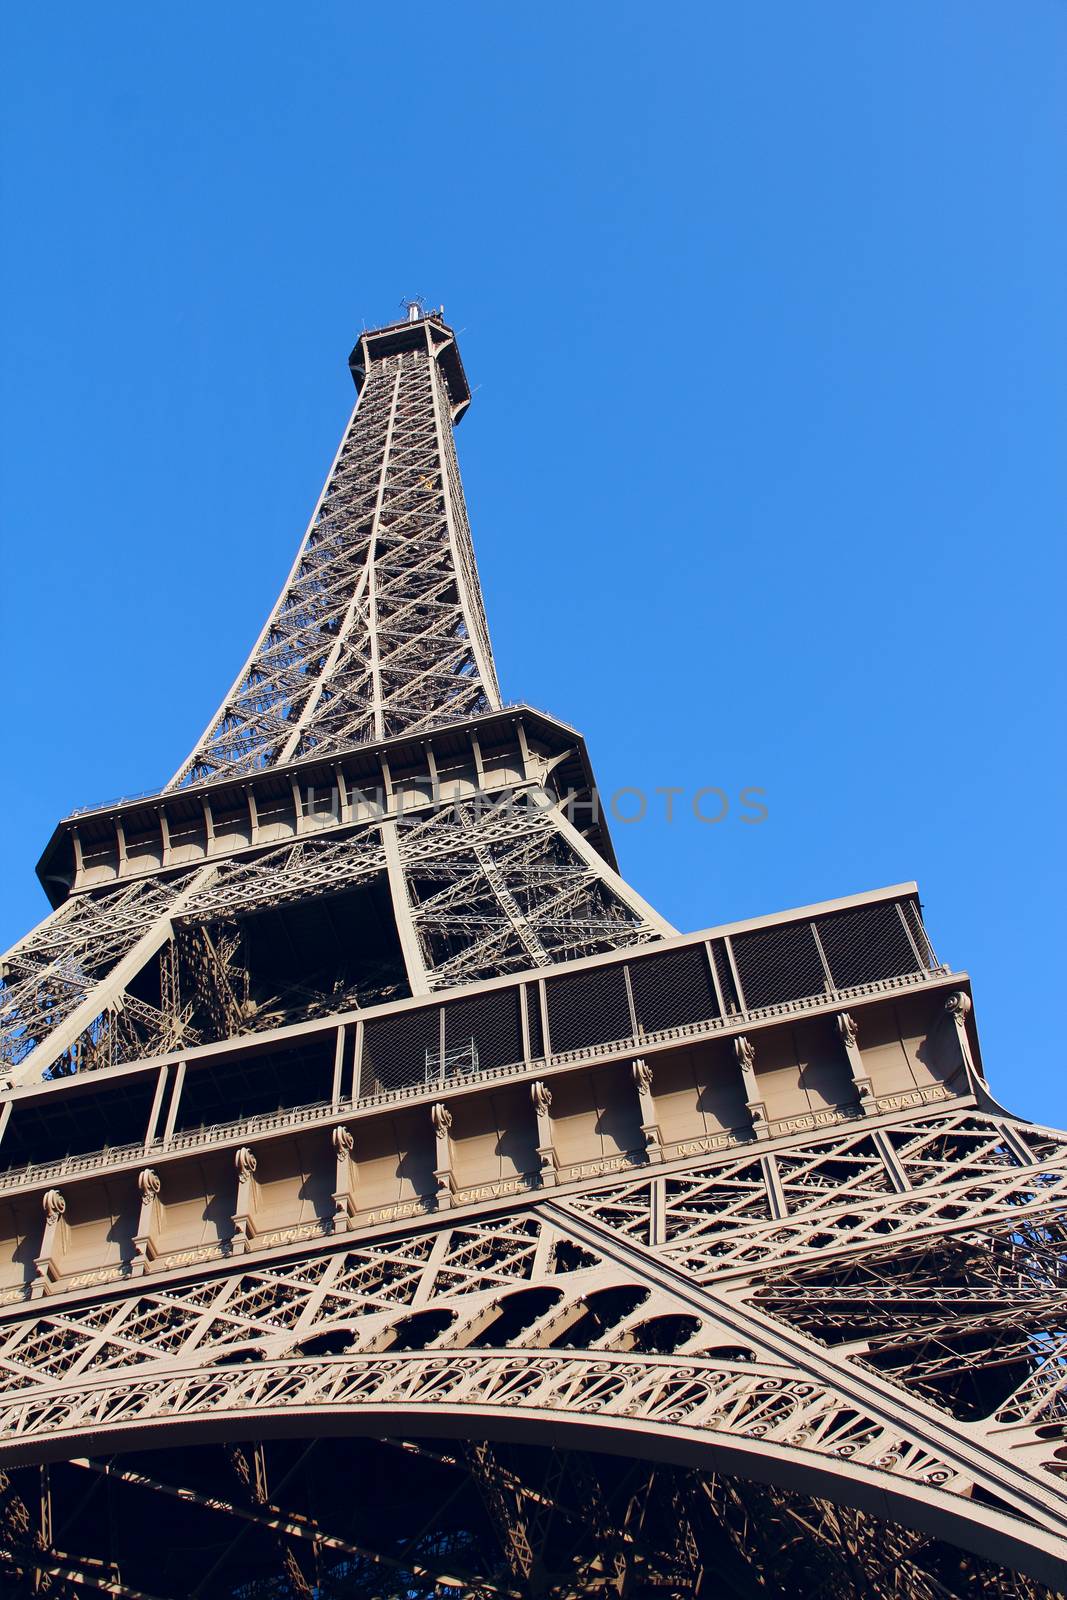 The Eiffel Tower in Paris, France by destillat